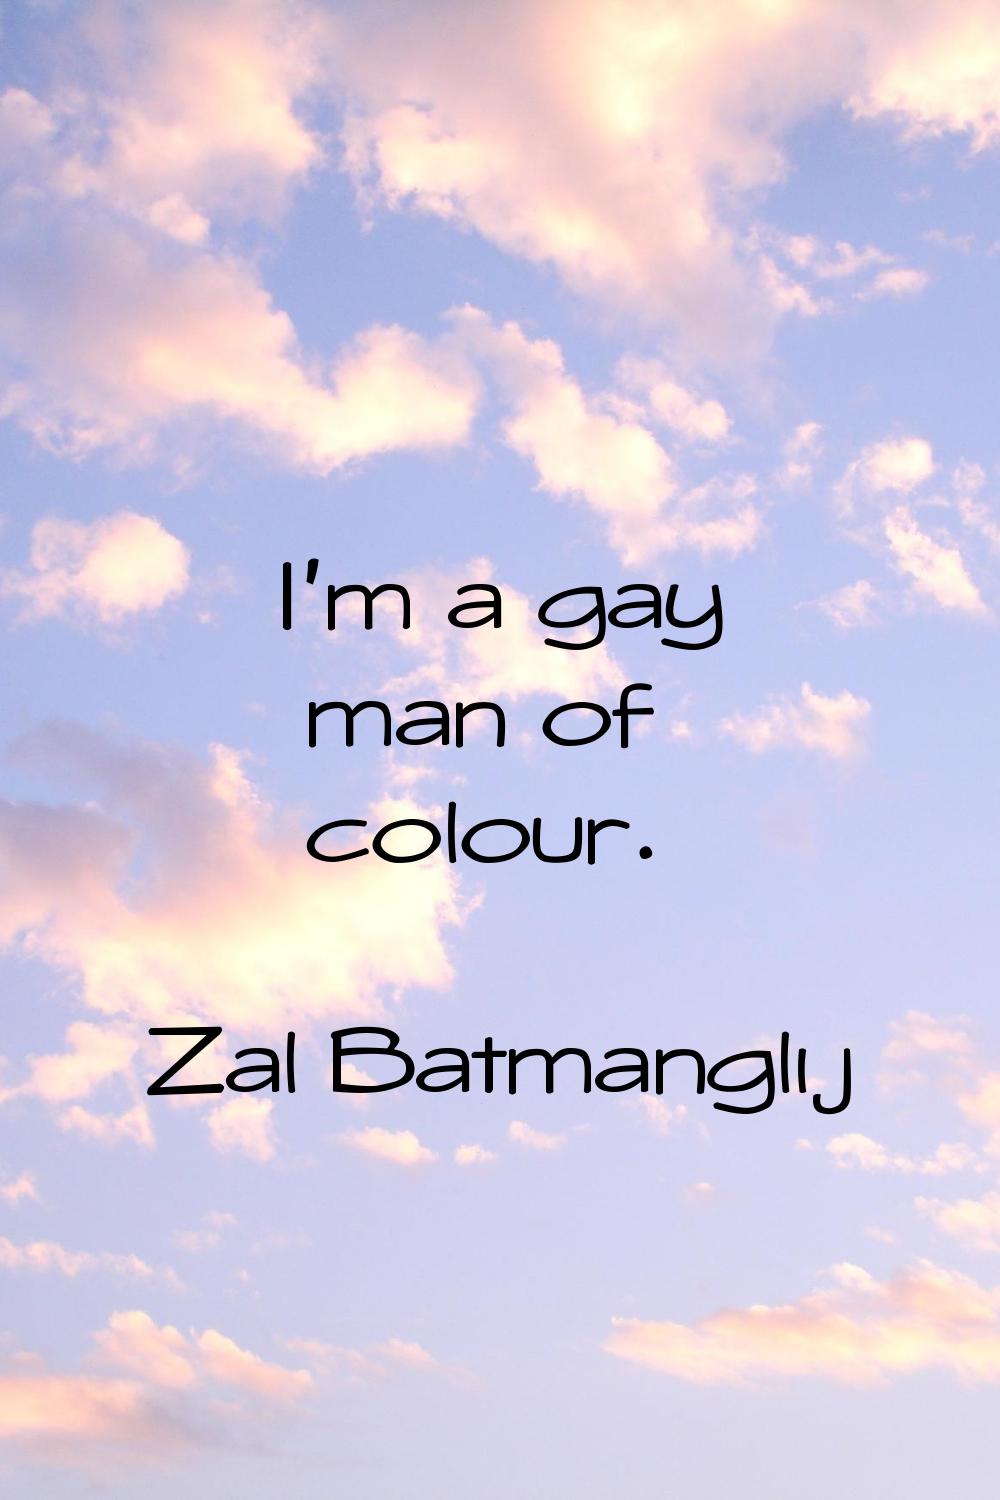 I'm a gay man of colour.